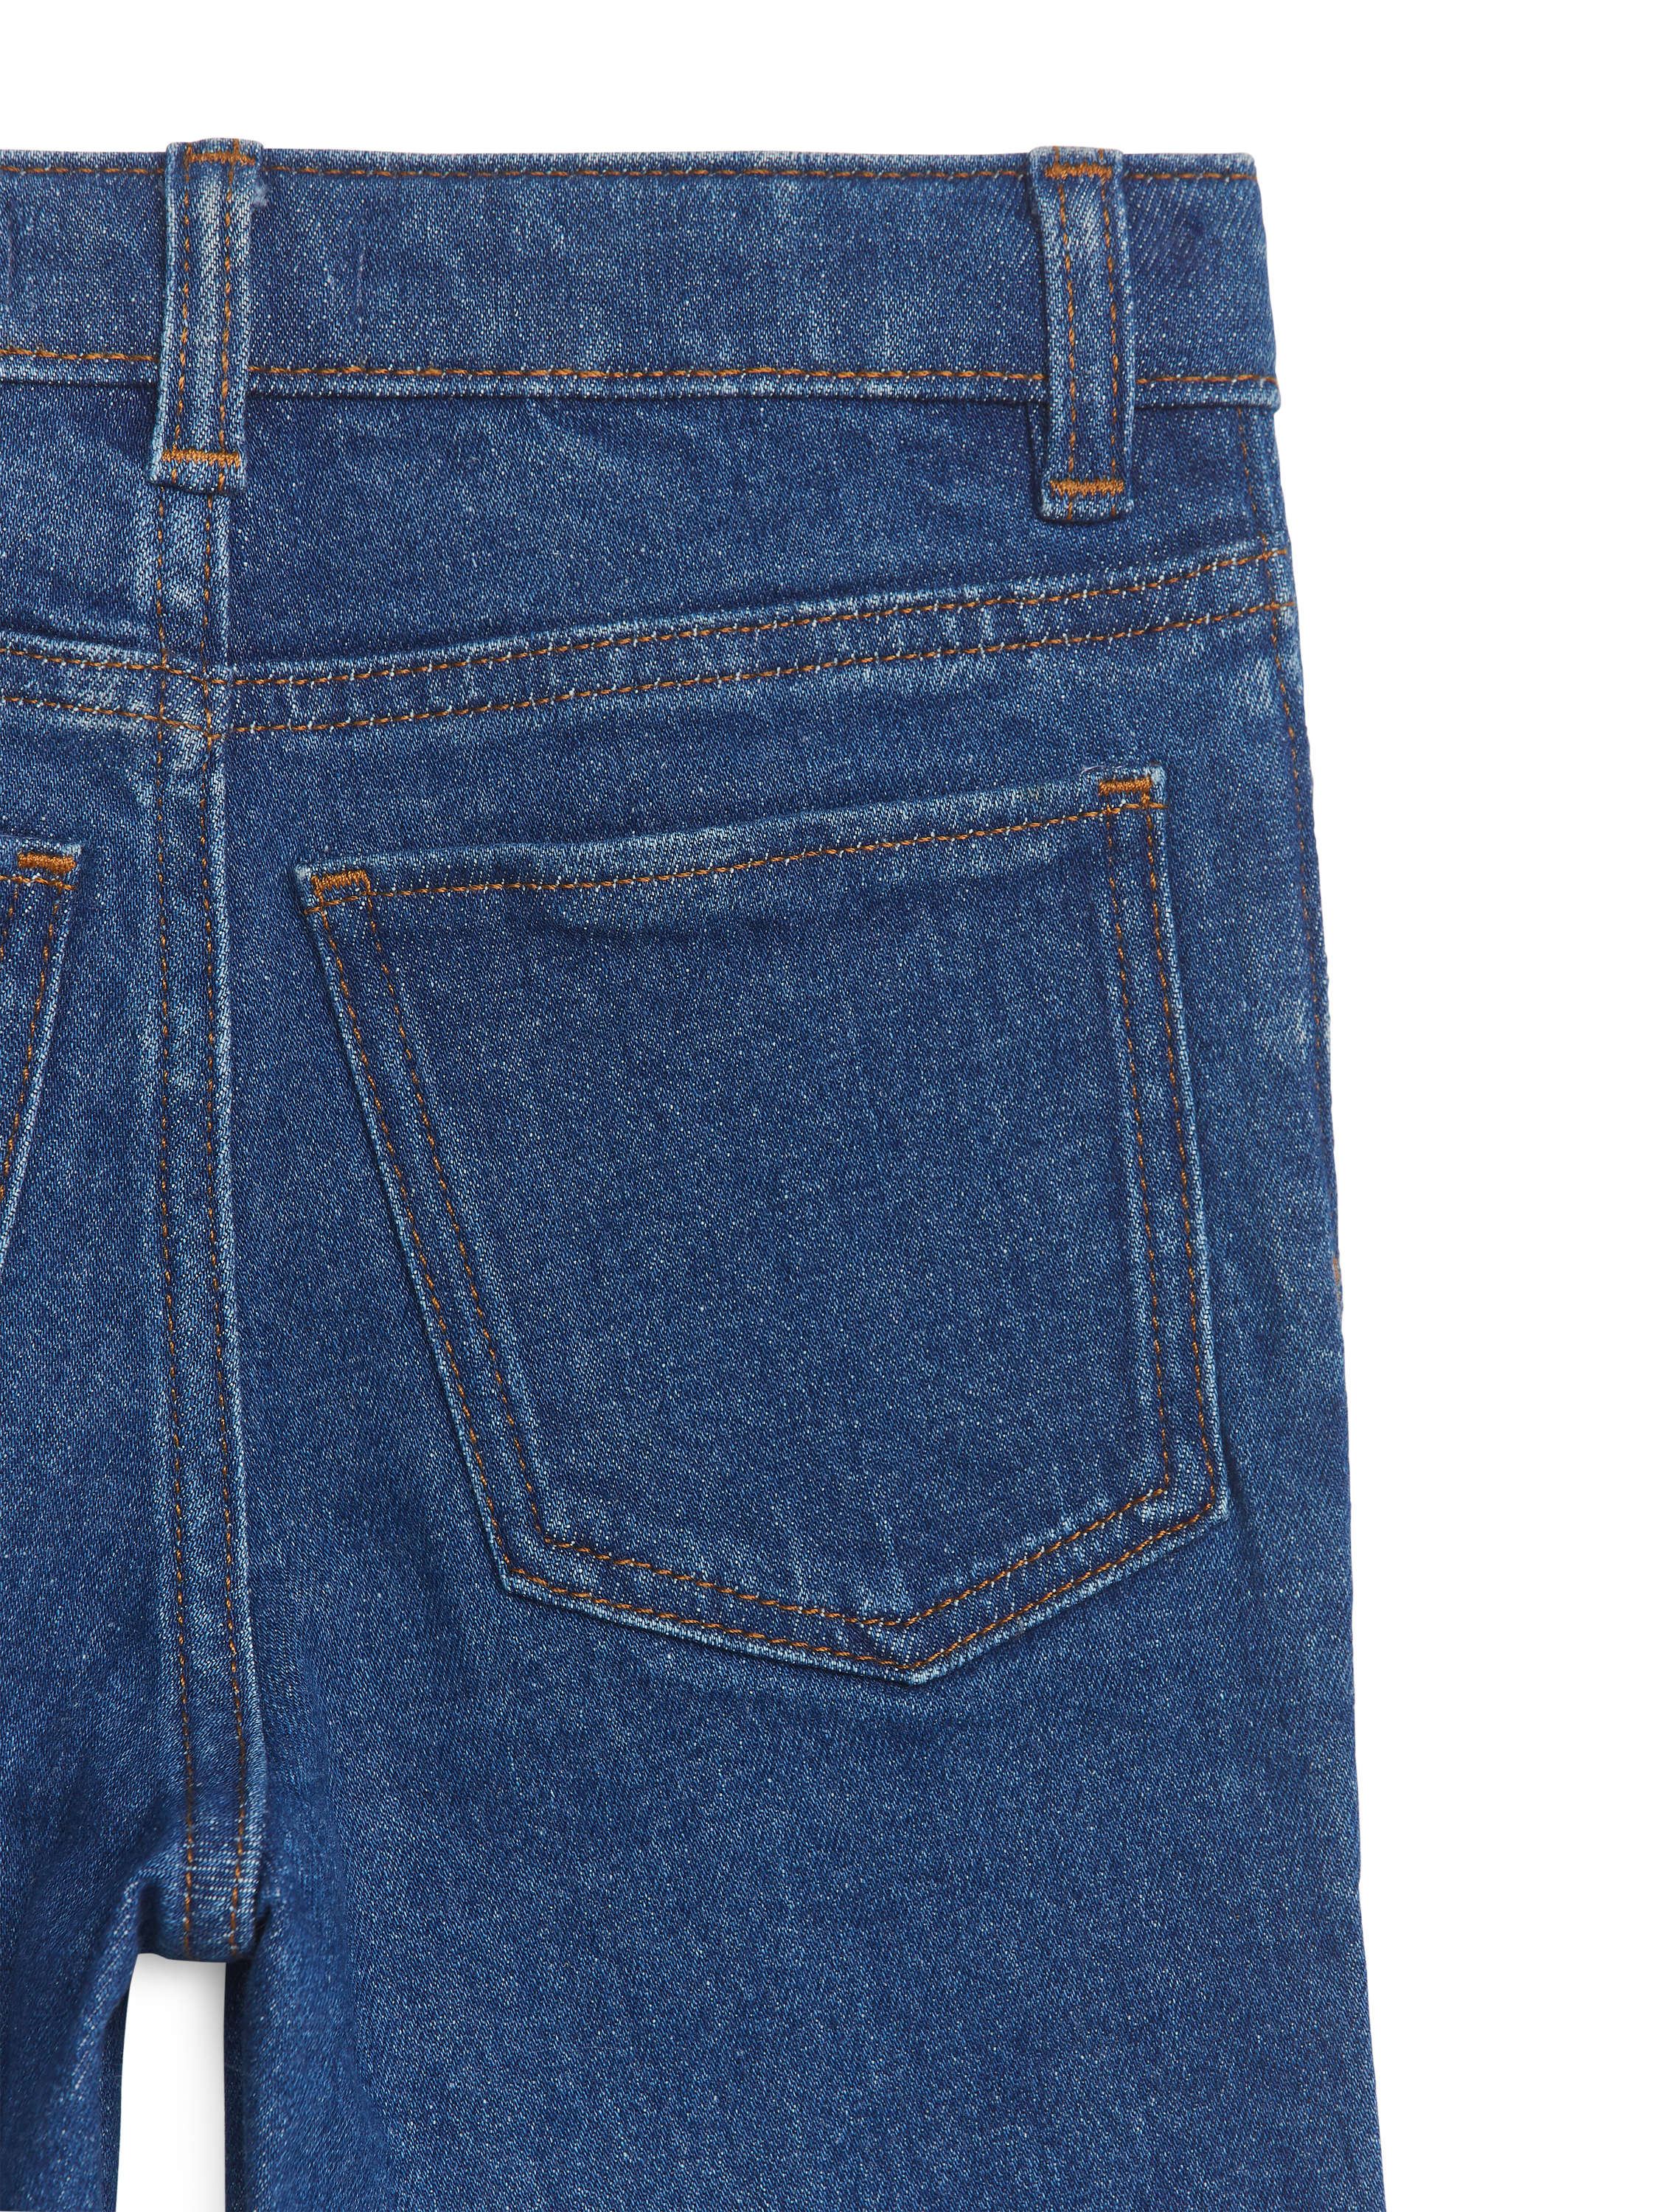 شلوار جینز 22796 سایز 2 تا 14 سال مارک ARKET